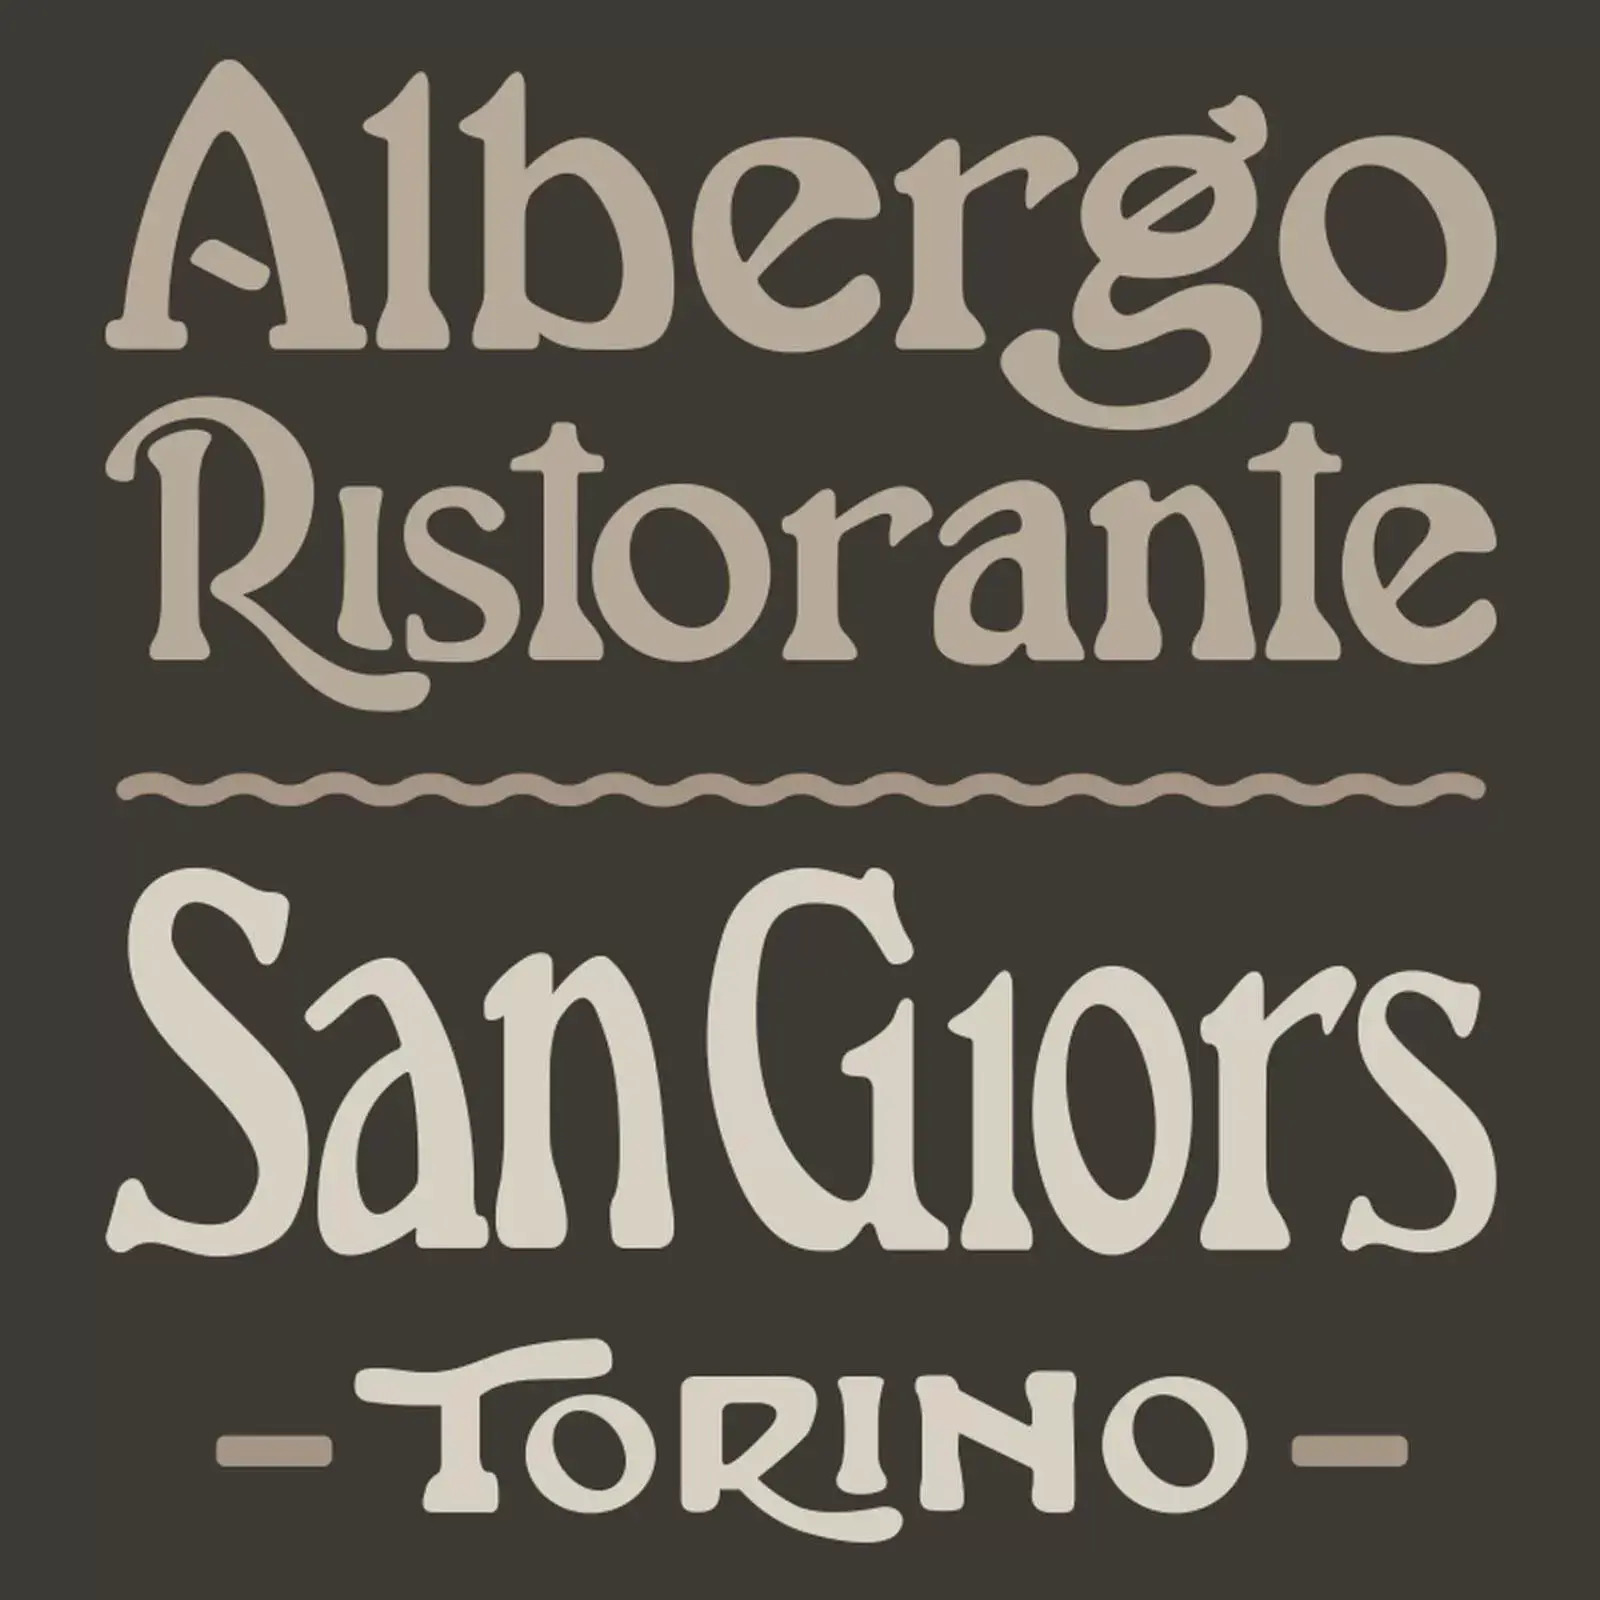 Property logo or sign in Albergo Ristorante San Giors